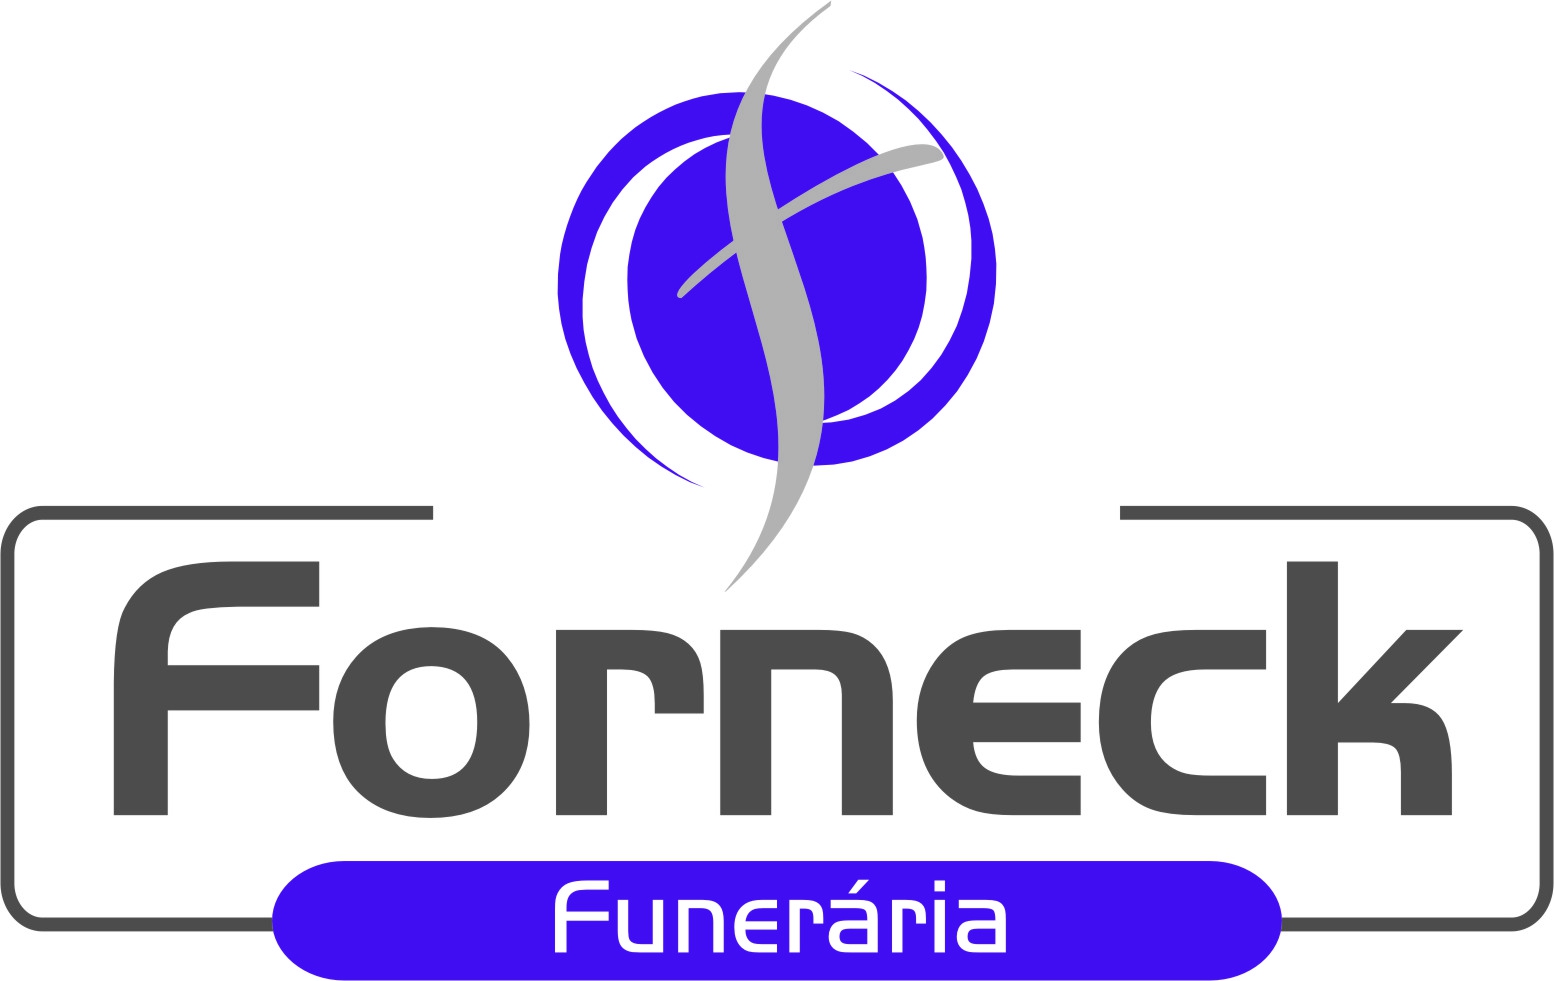 Funerria Forneck